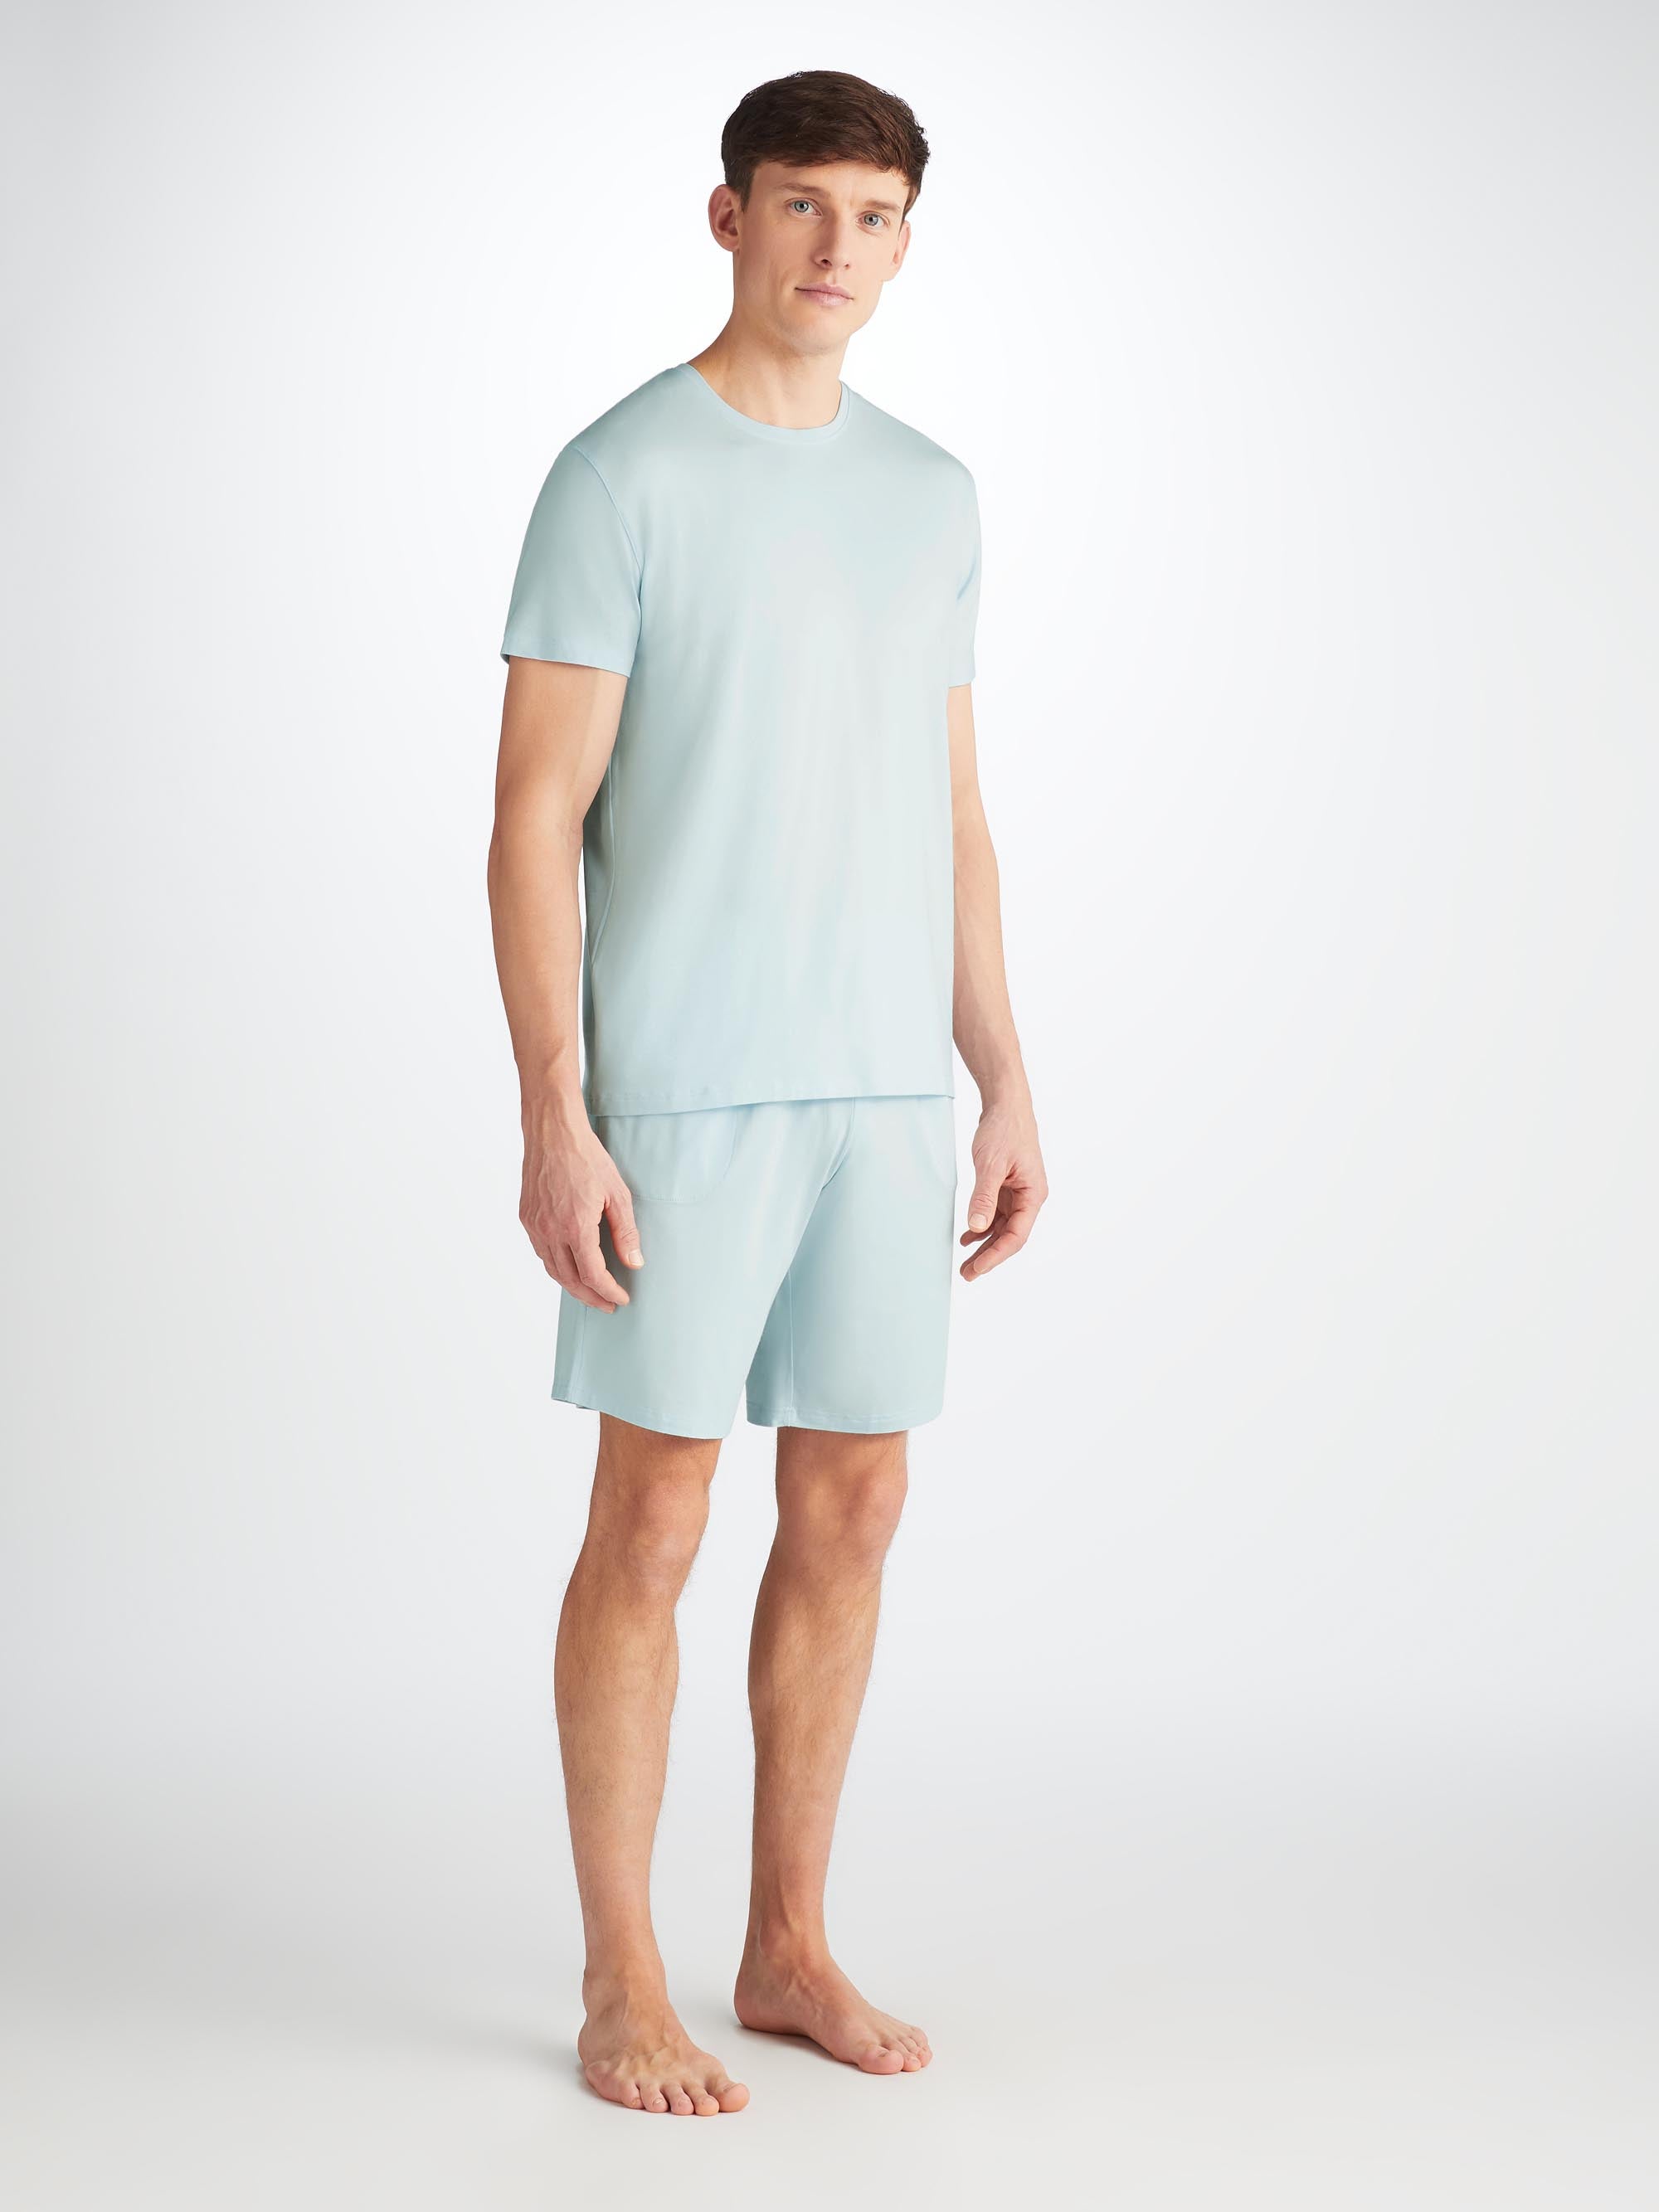 Men's Lounge Shorts Basel Micro Modal Stretch Ice Blue